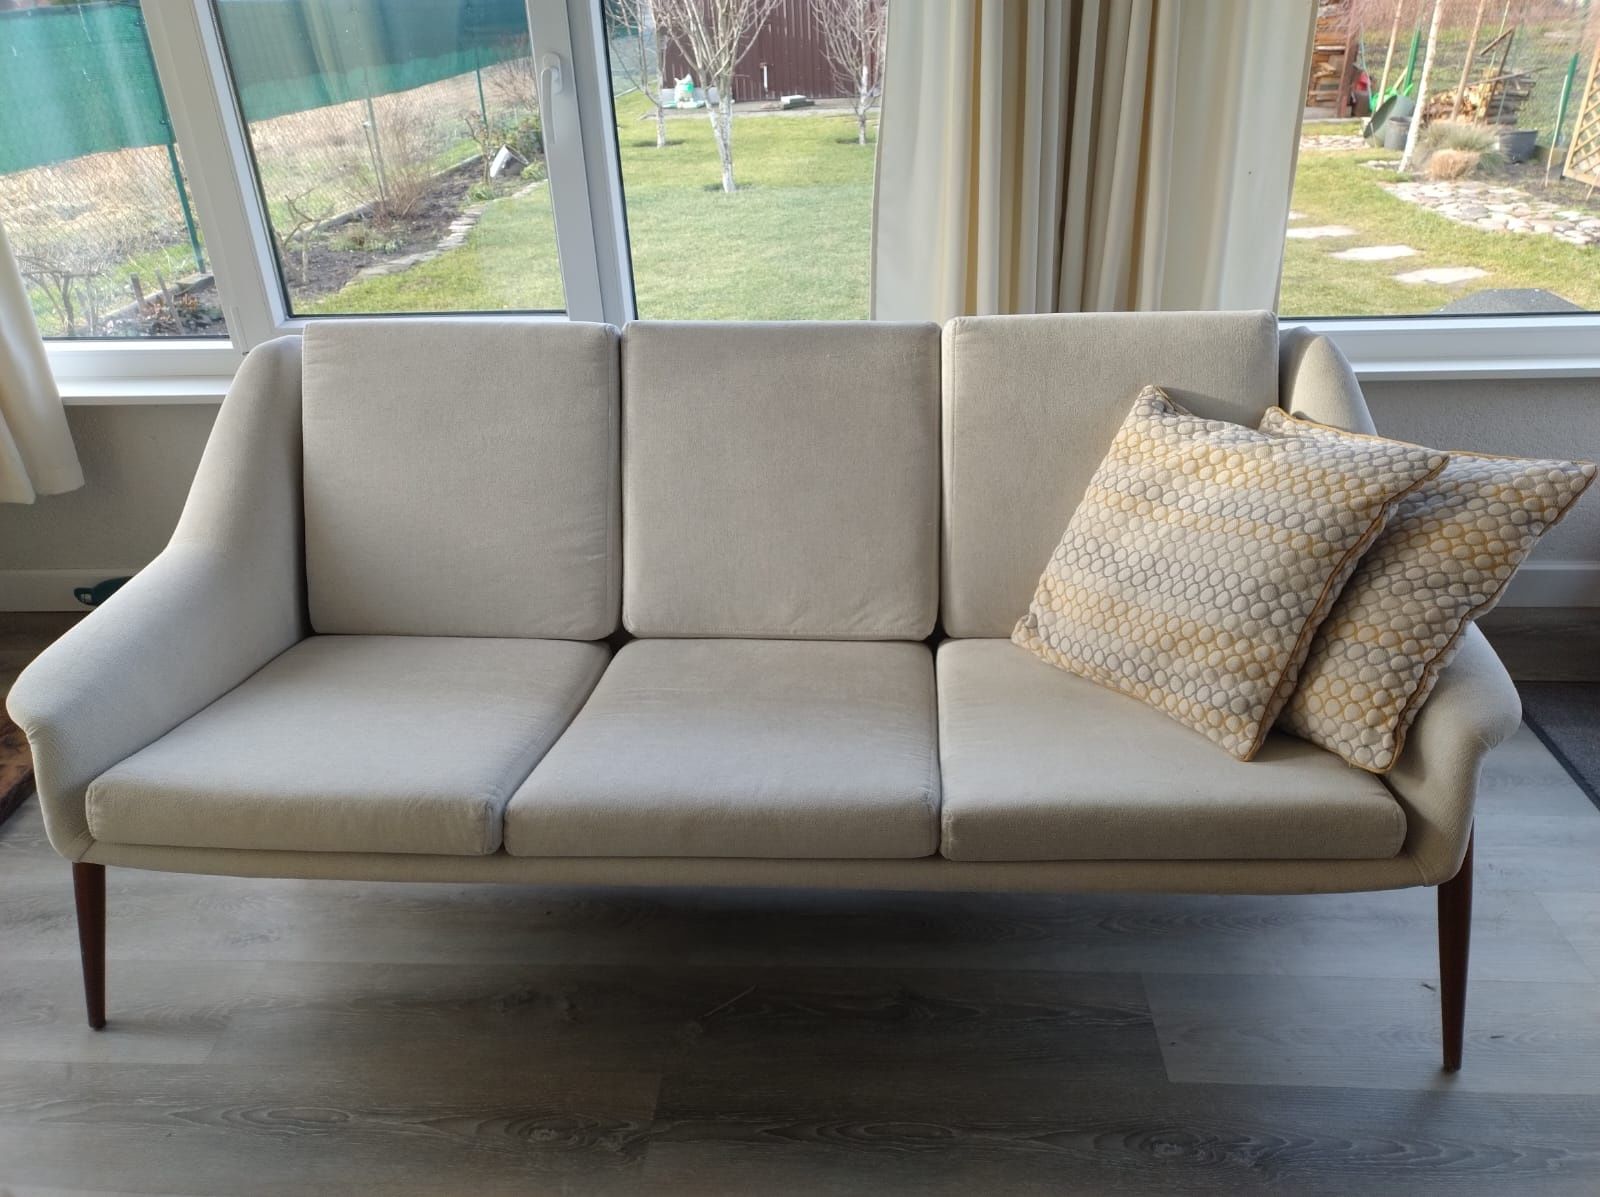 Sofa lara 60-te po renowacji